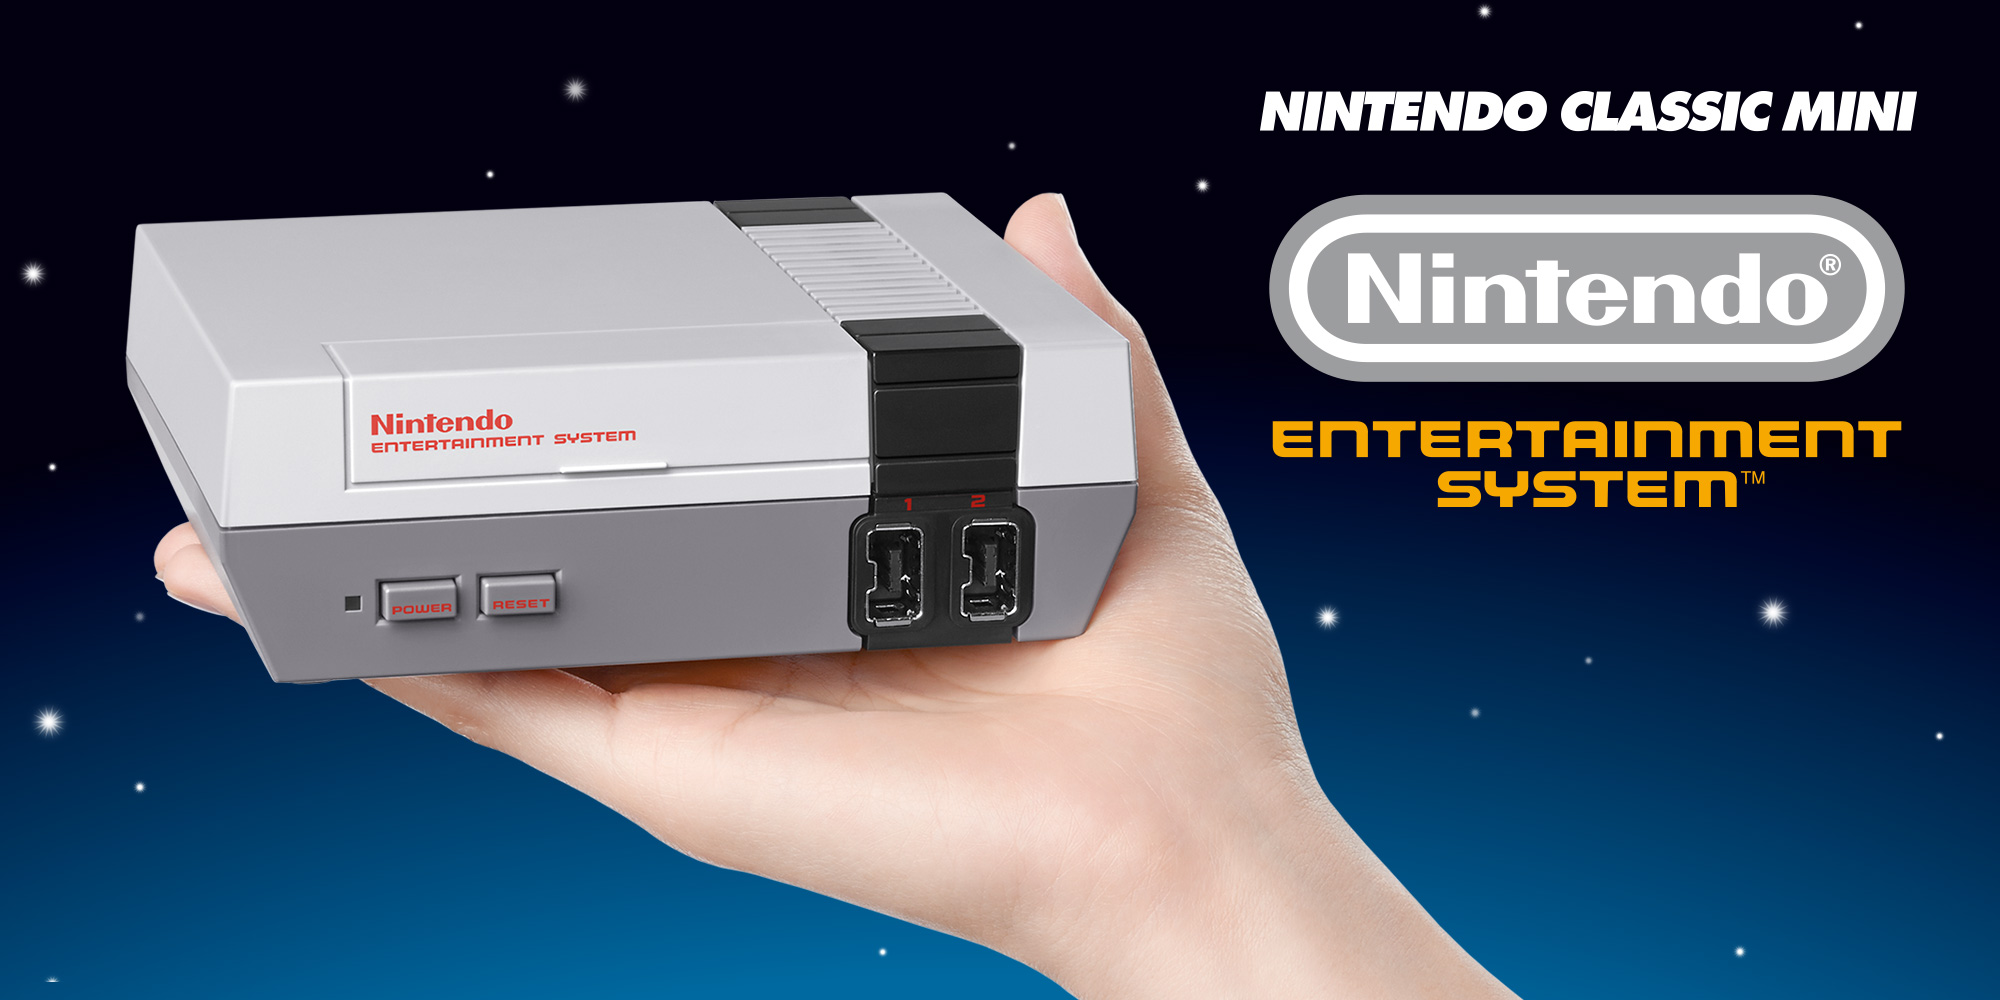 La console Nintendo Classic Mini: Nintendo Entertainment System sera disponible le 12 novembre et proposera 30 classiques de la NES